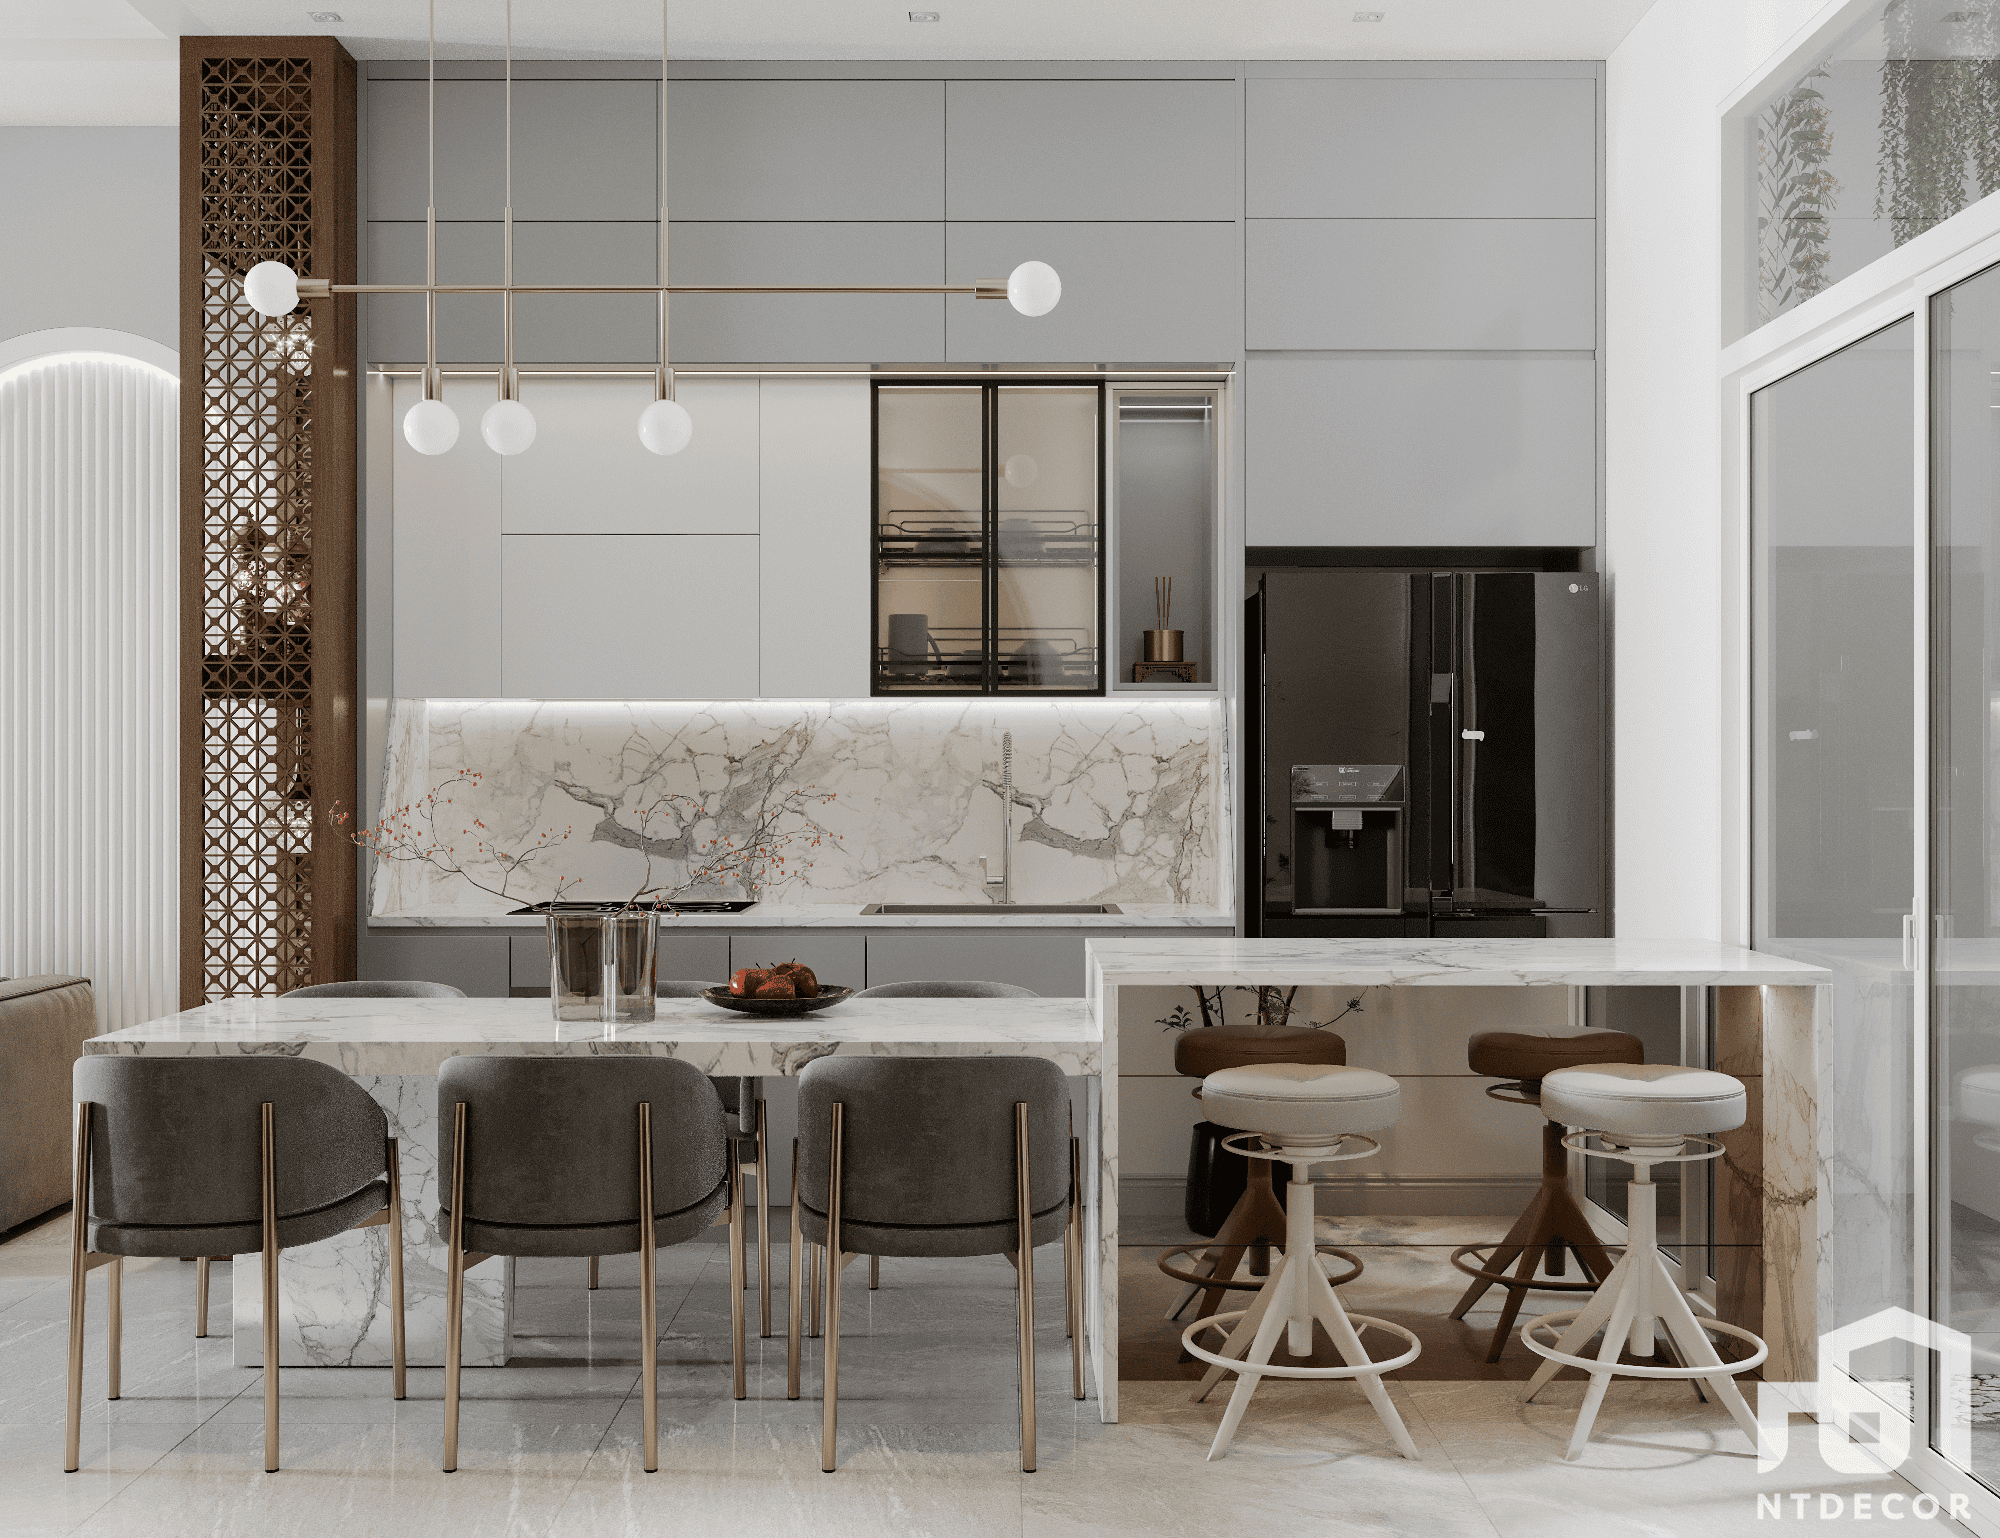 Kitchen 3D Design of Vi's House Interior Design Modern Style | NTDecor